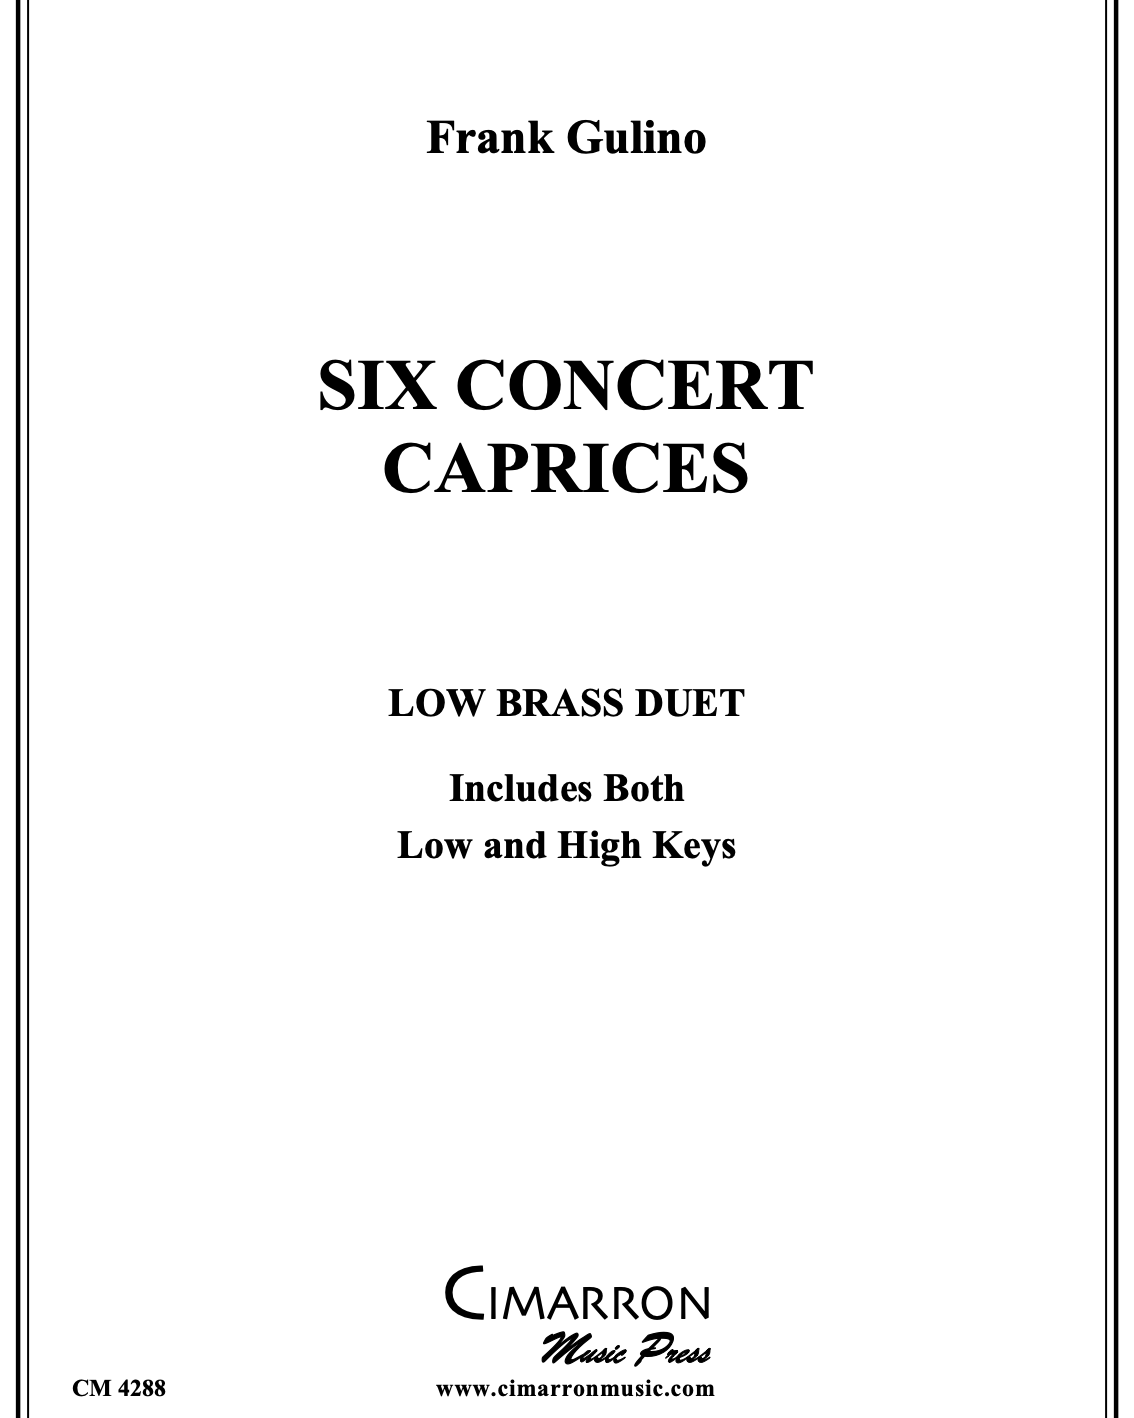 6 Concert Caprices